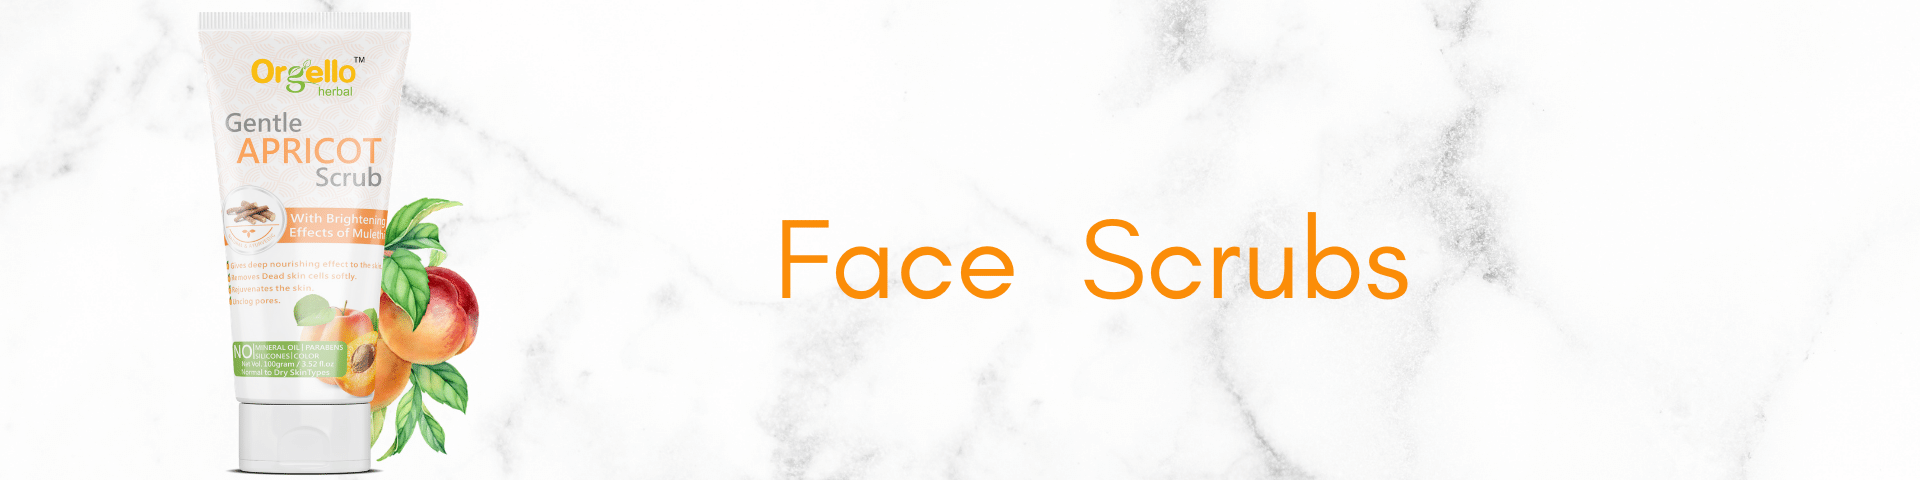 Face Scrub Banner